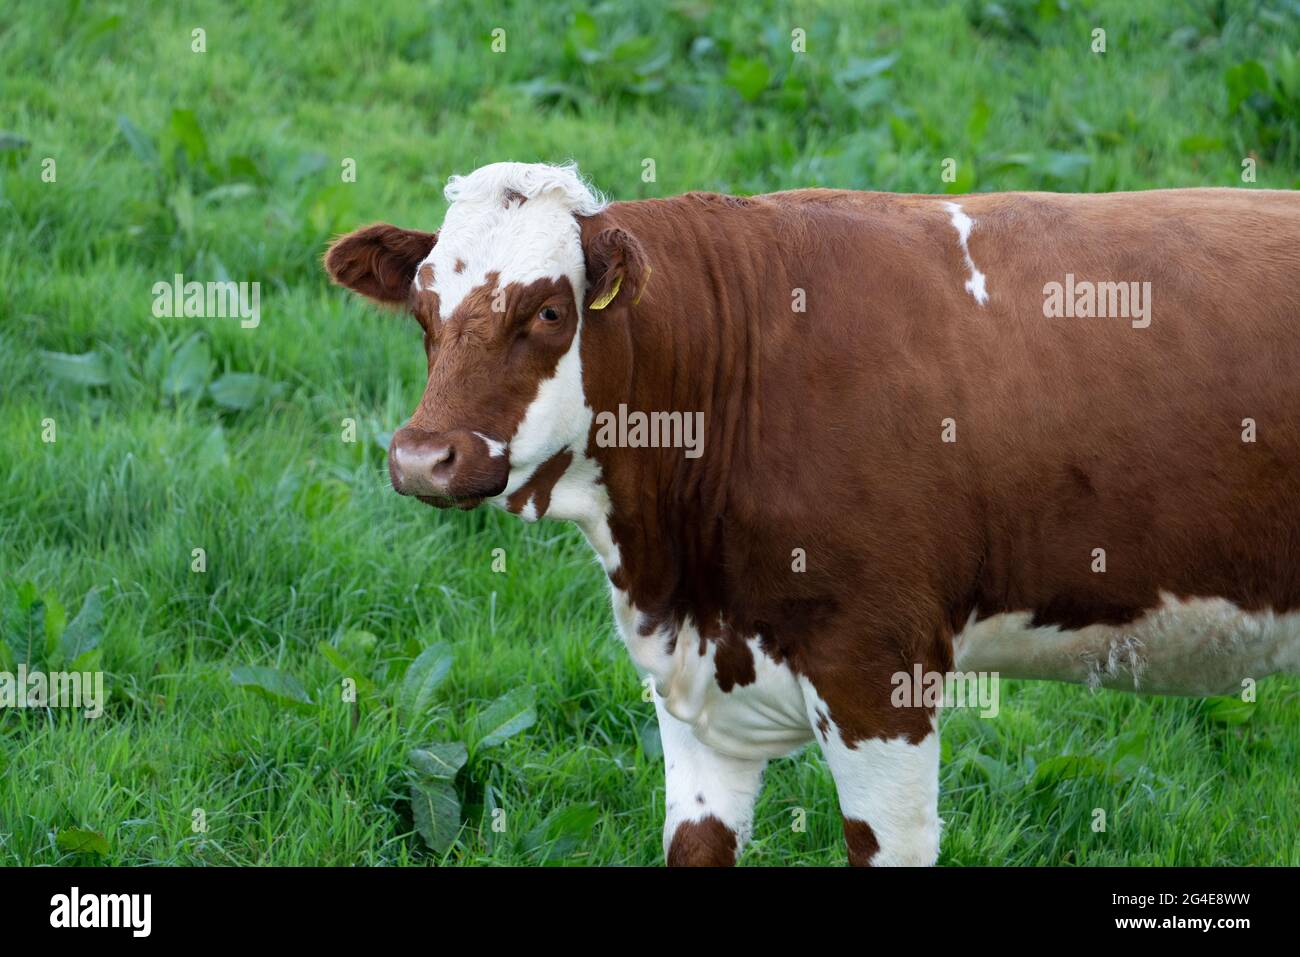 Ayrshire cow in the field, Ireland Stock Photo